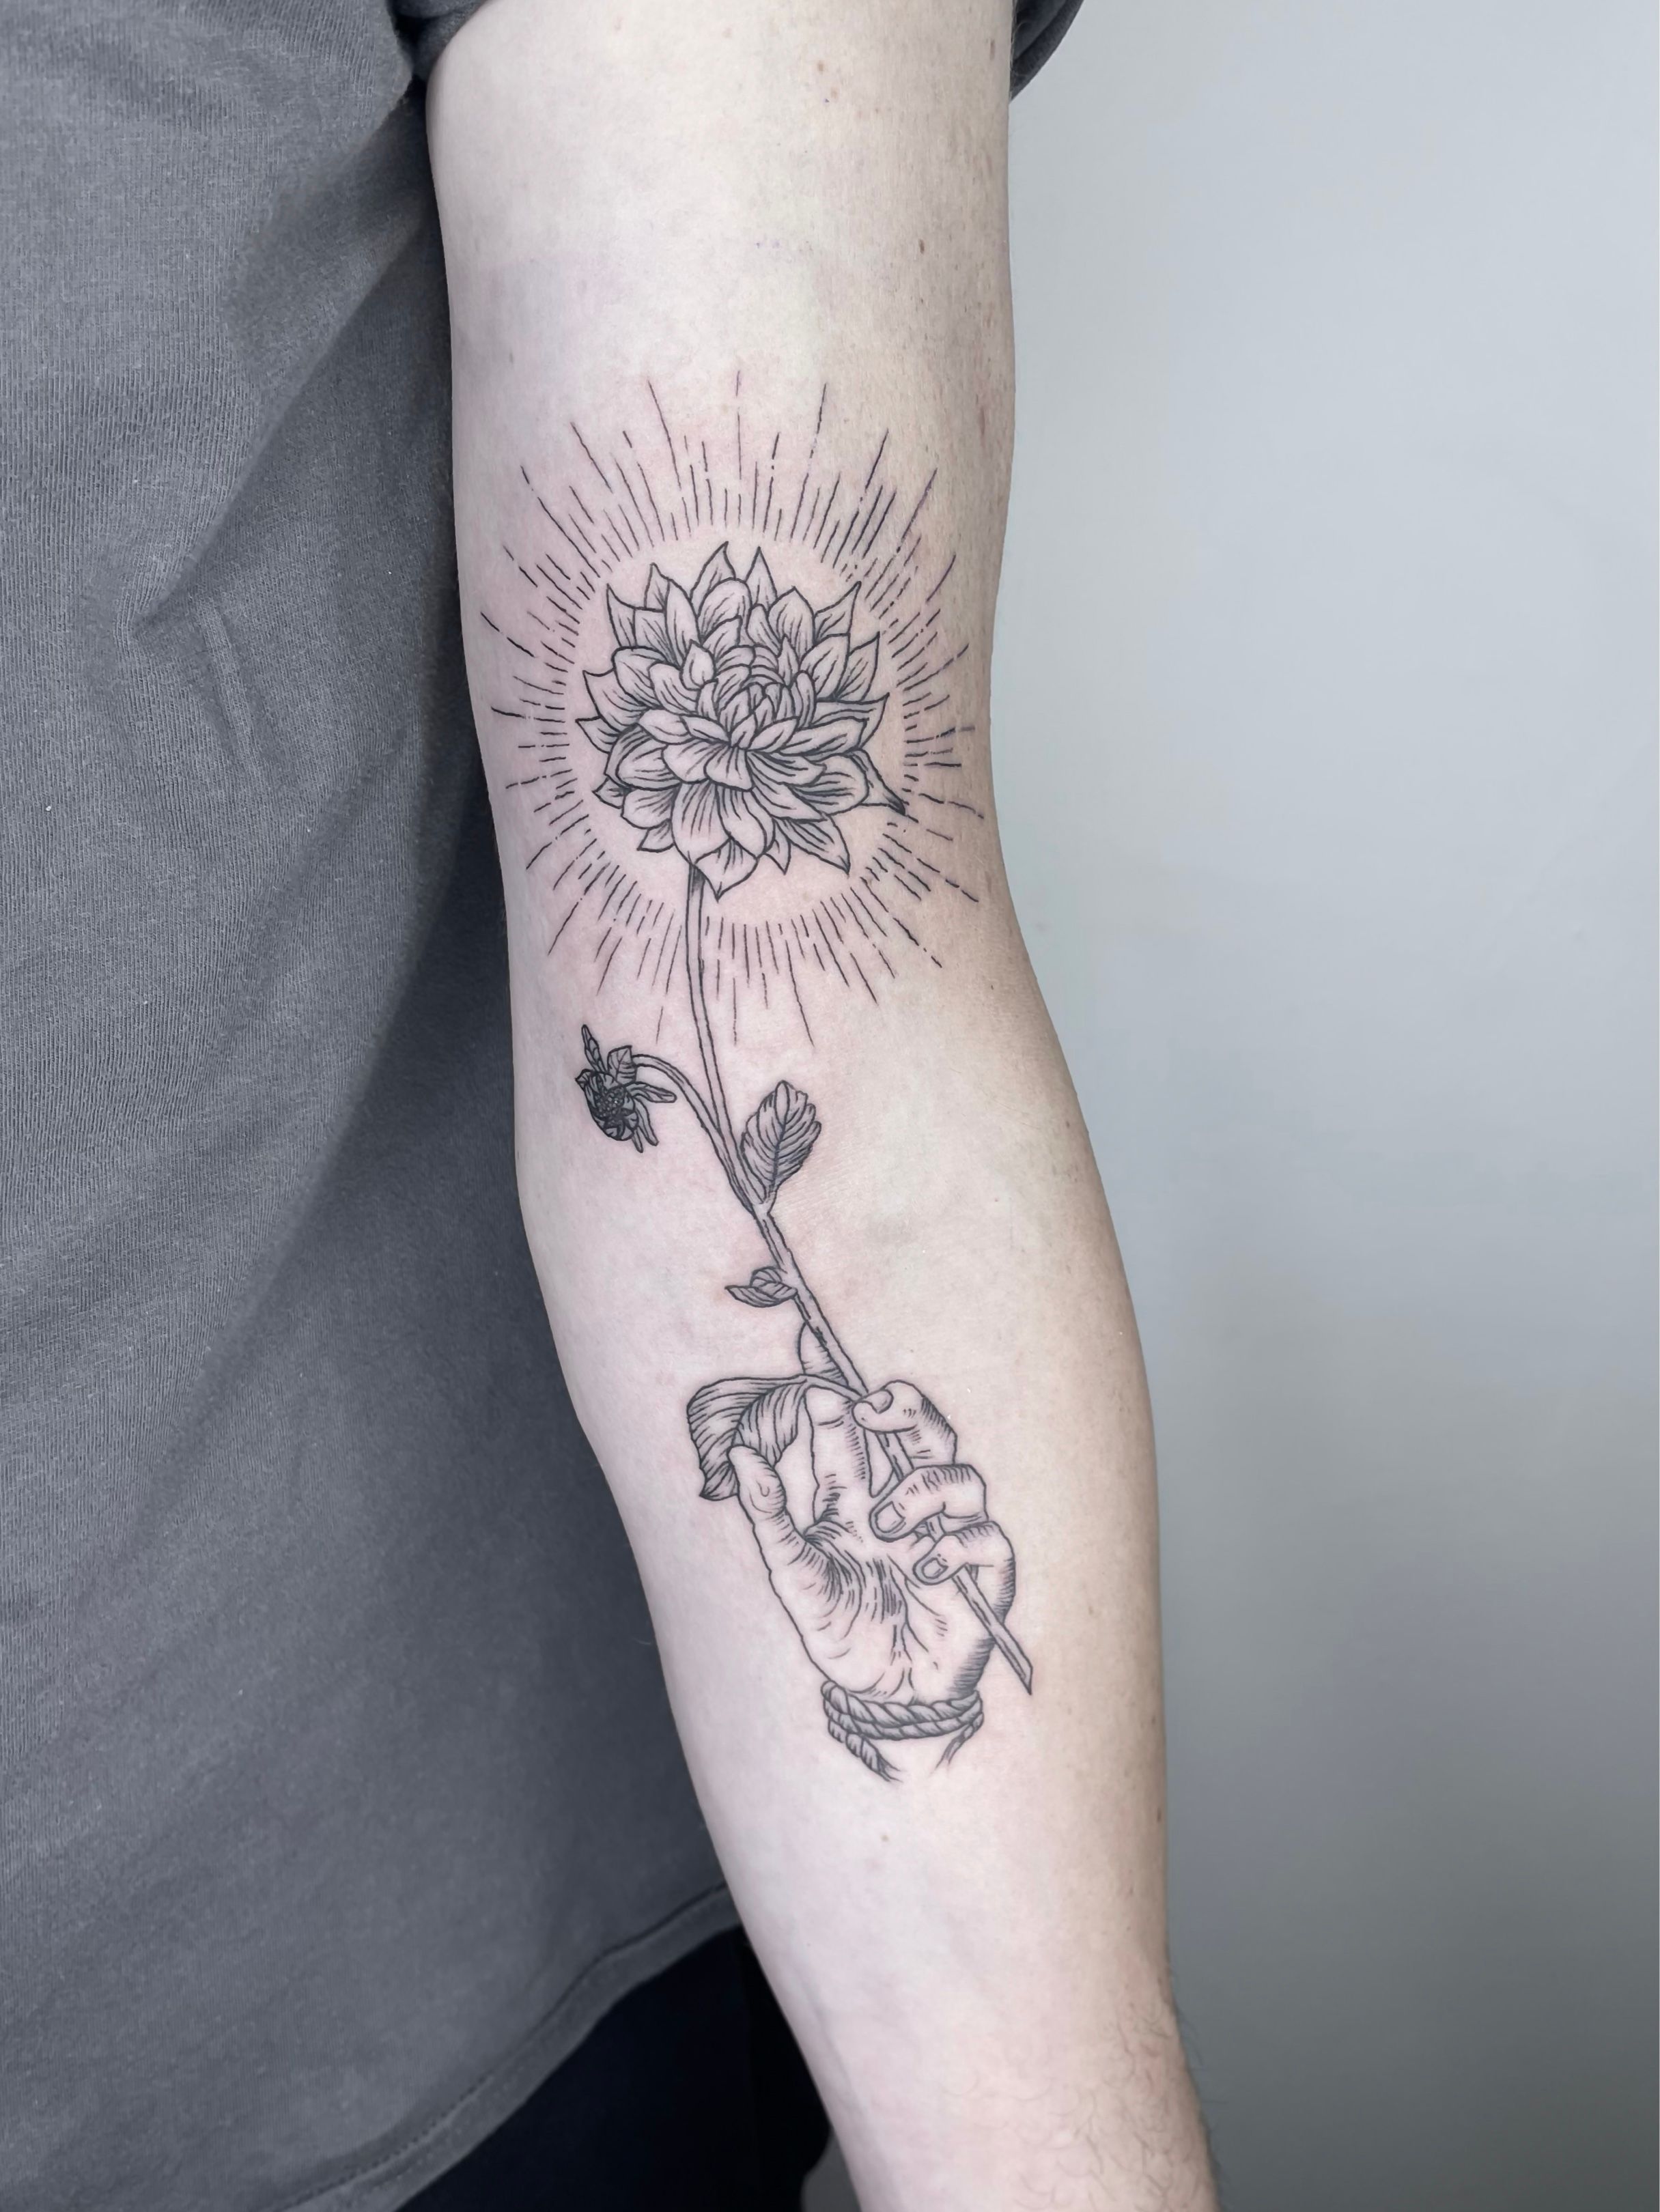 Black Dahlia Tattoo  Piercing Studio  Small tattoos by Vaggelis Manousos   Facebook